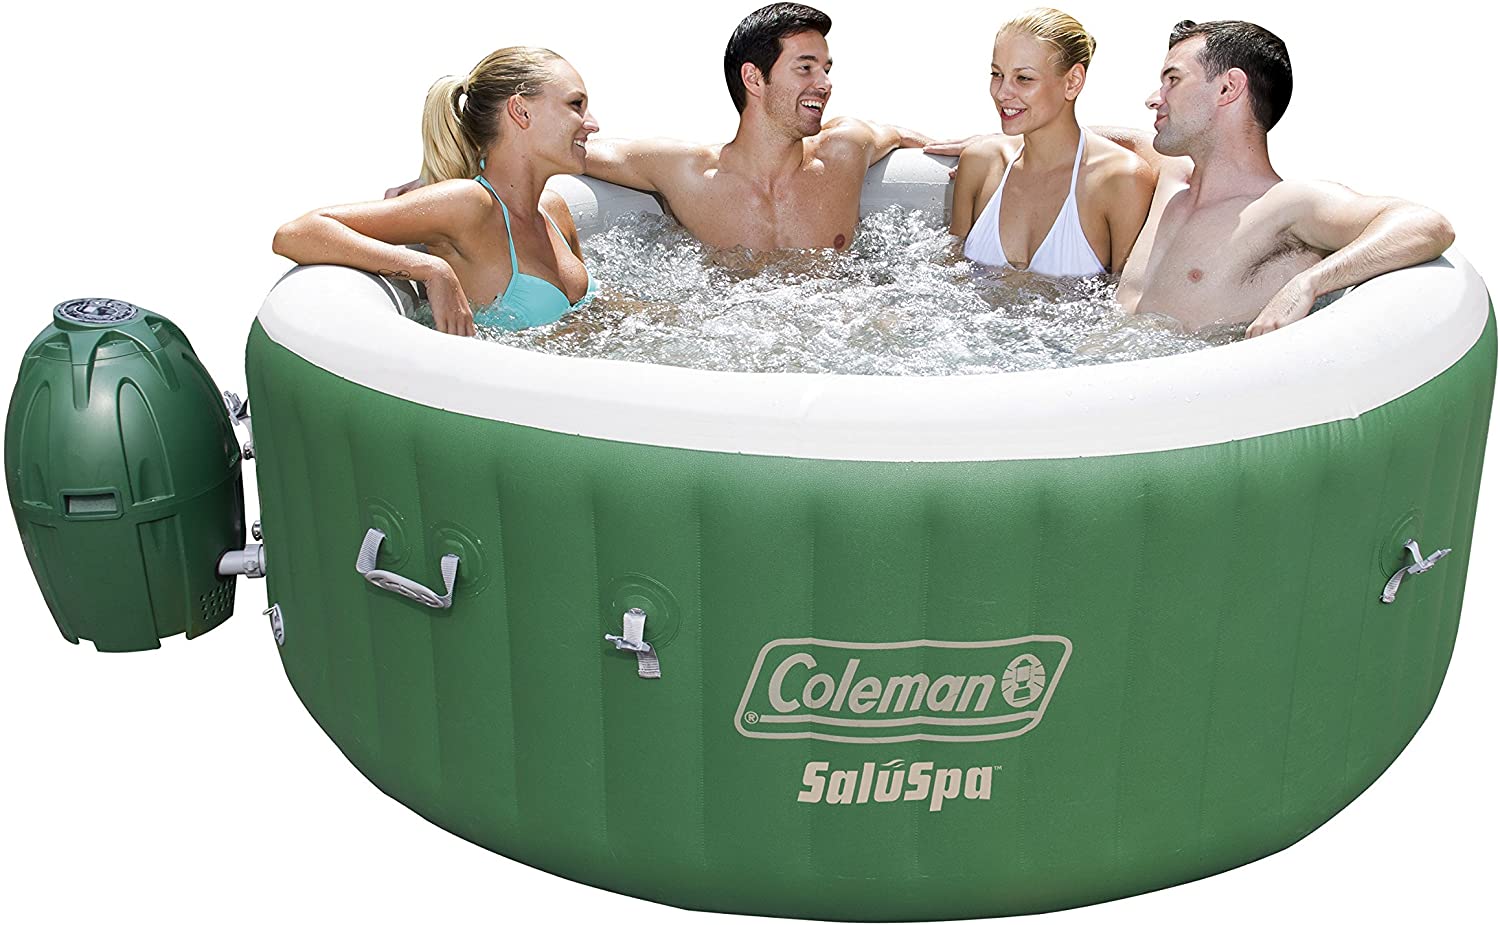 2. Coleman SaluSpa Inflatable Hot Tub